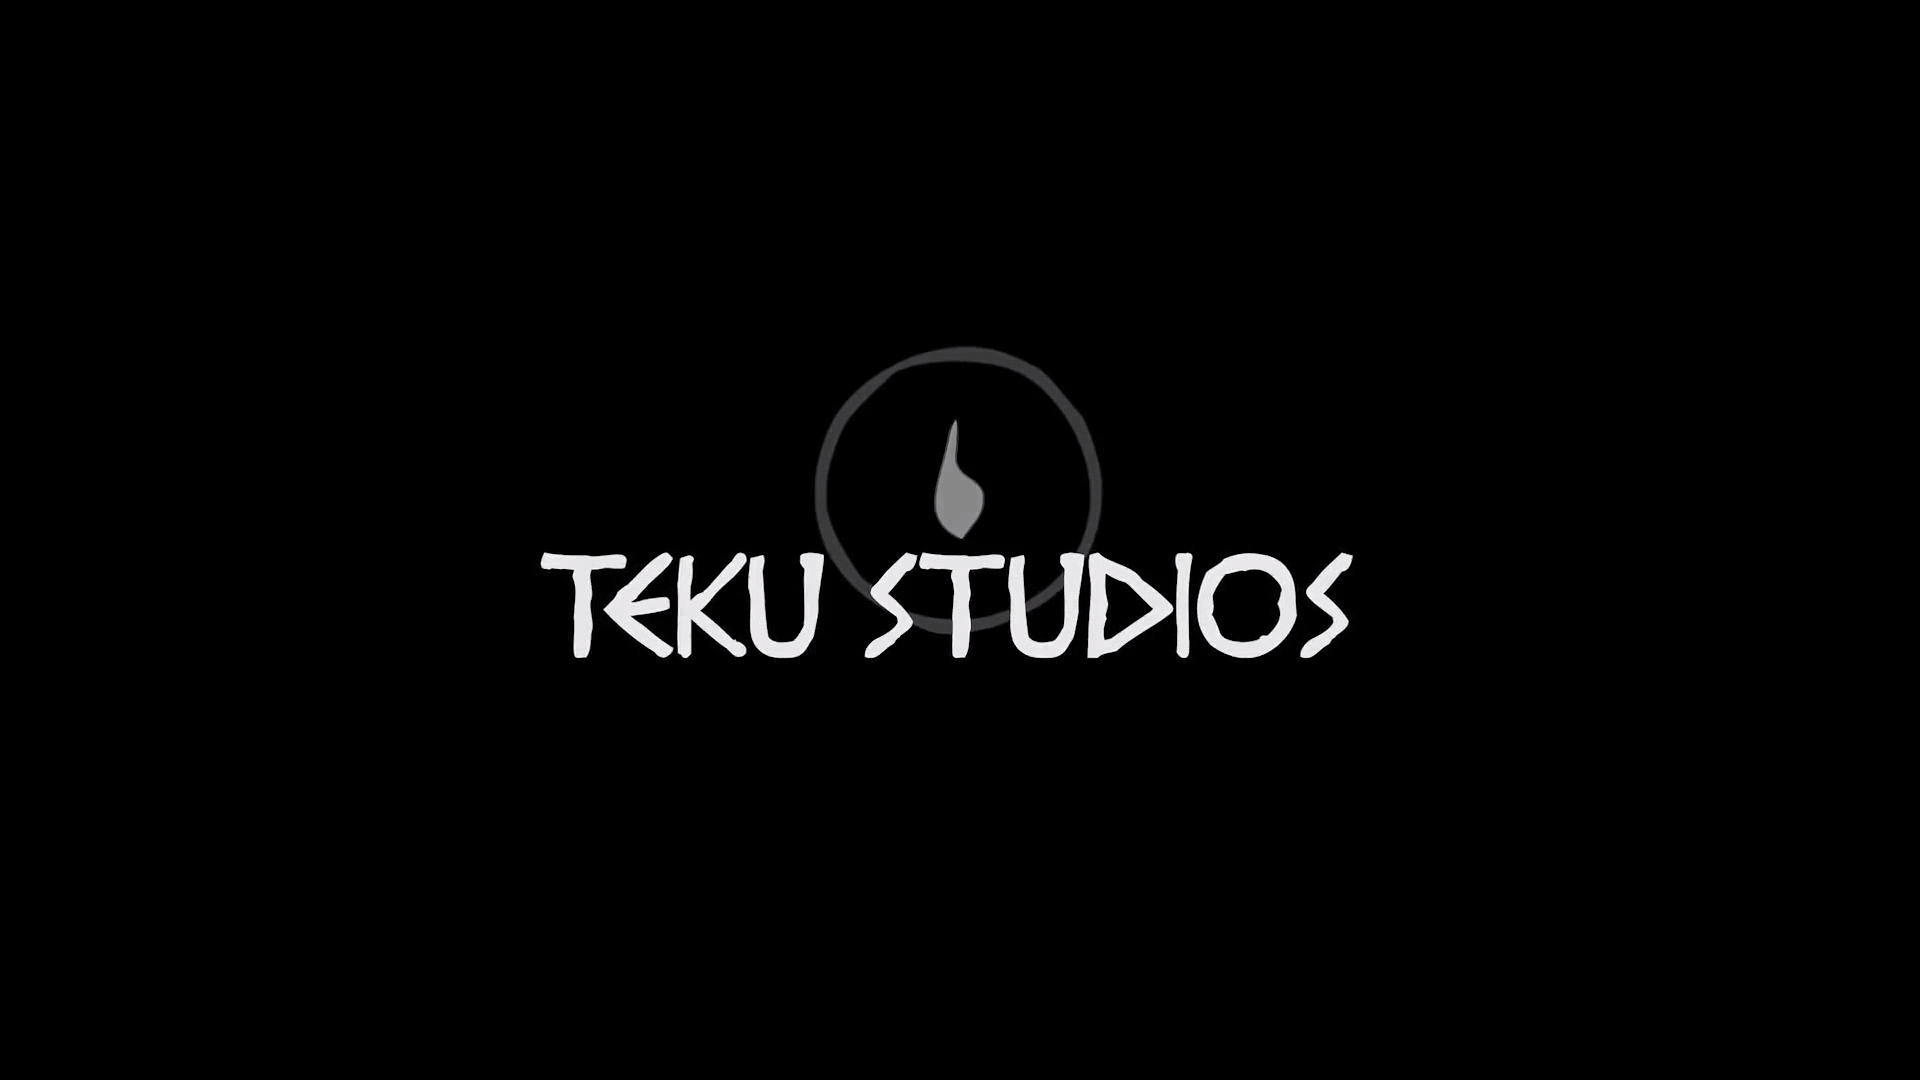 Indie Teku Studios Adds Wii U Stretch Goal To ‘Candle’ Kickstarter